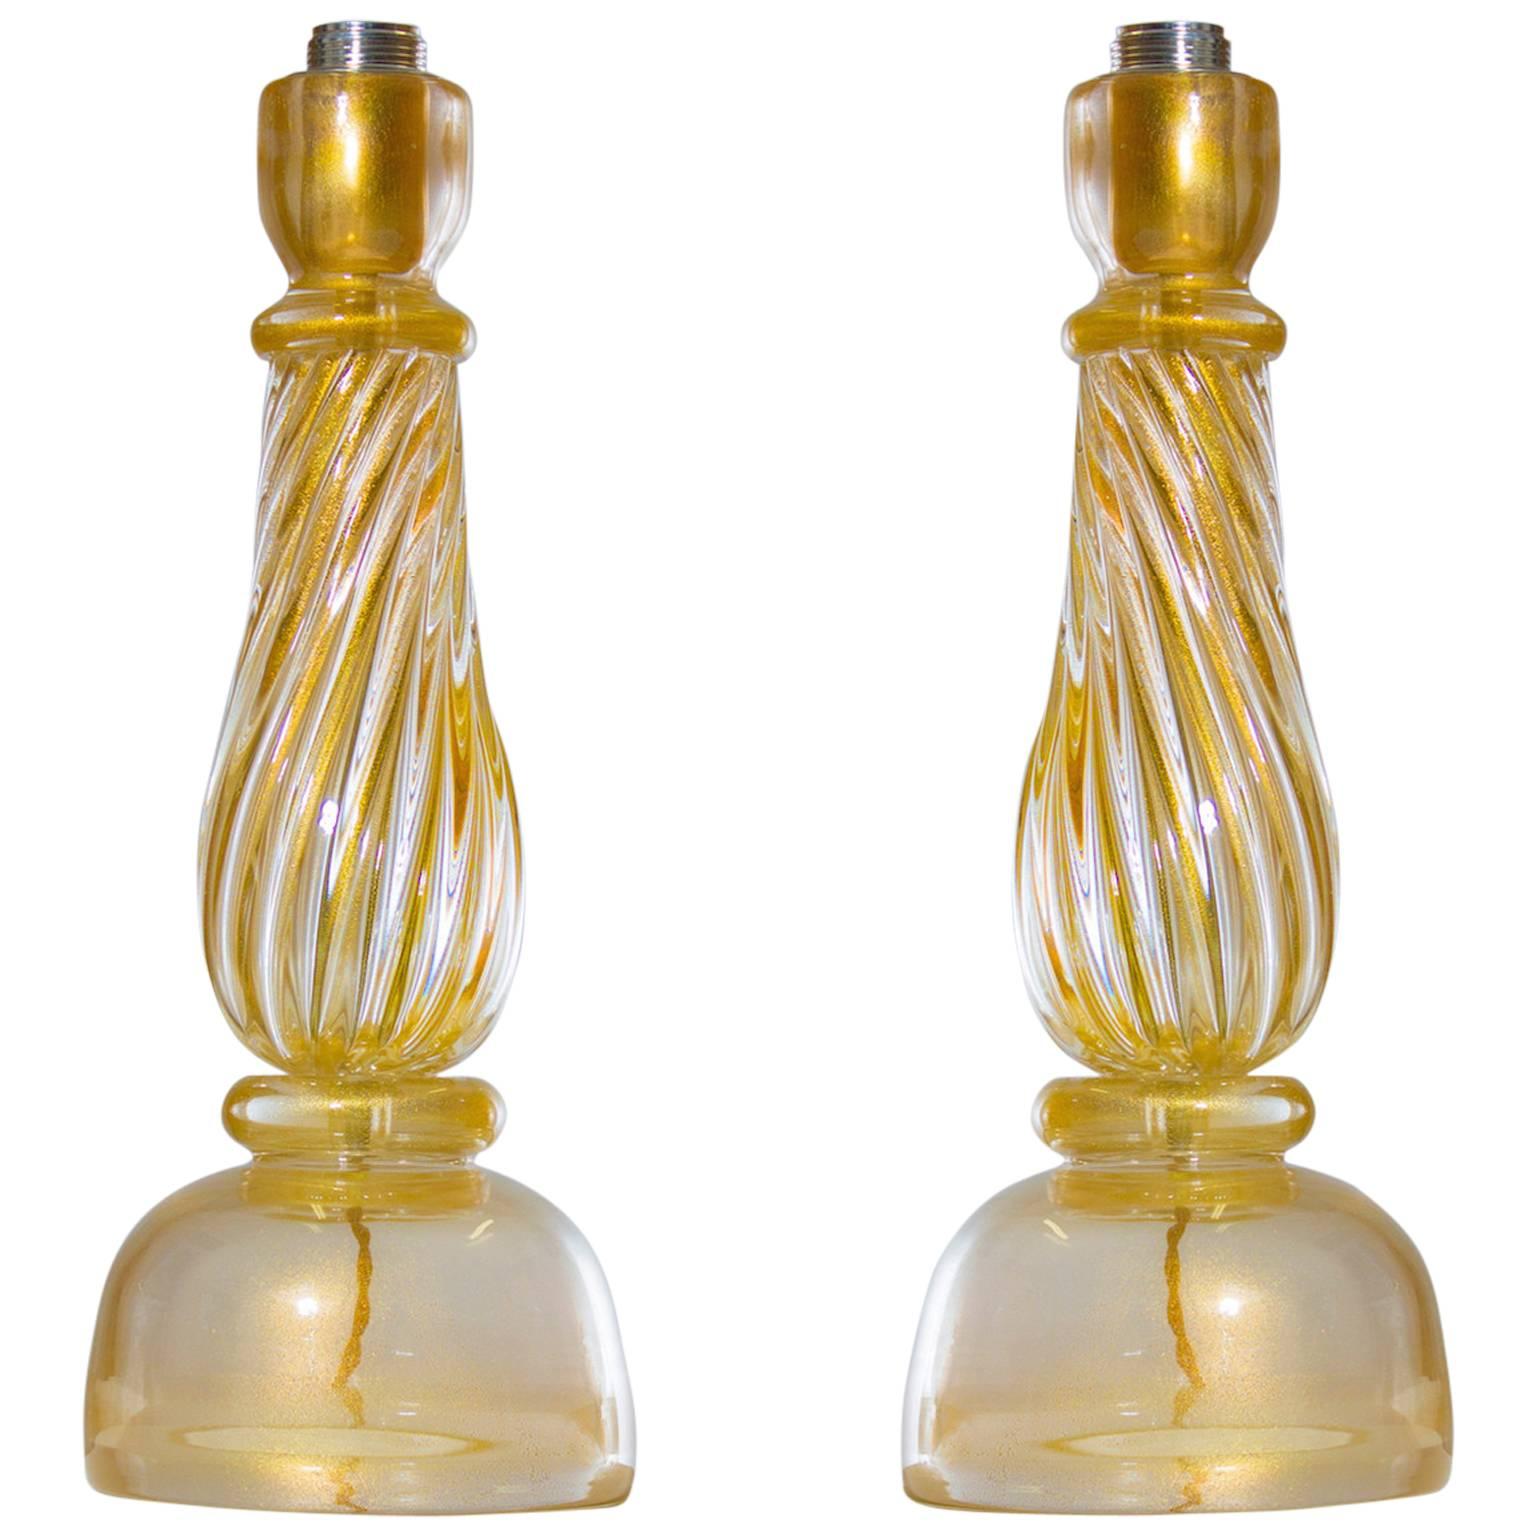 Italienisches Paar massiver italienischer Tischlampen aus Muranoglas, Gold 24 Karat